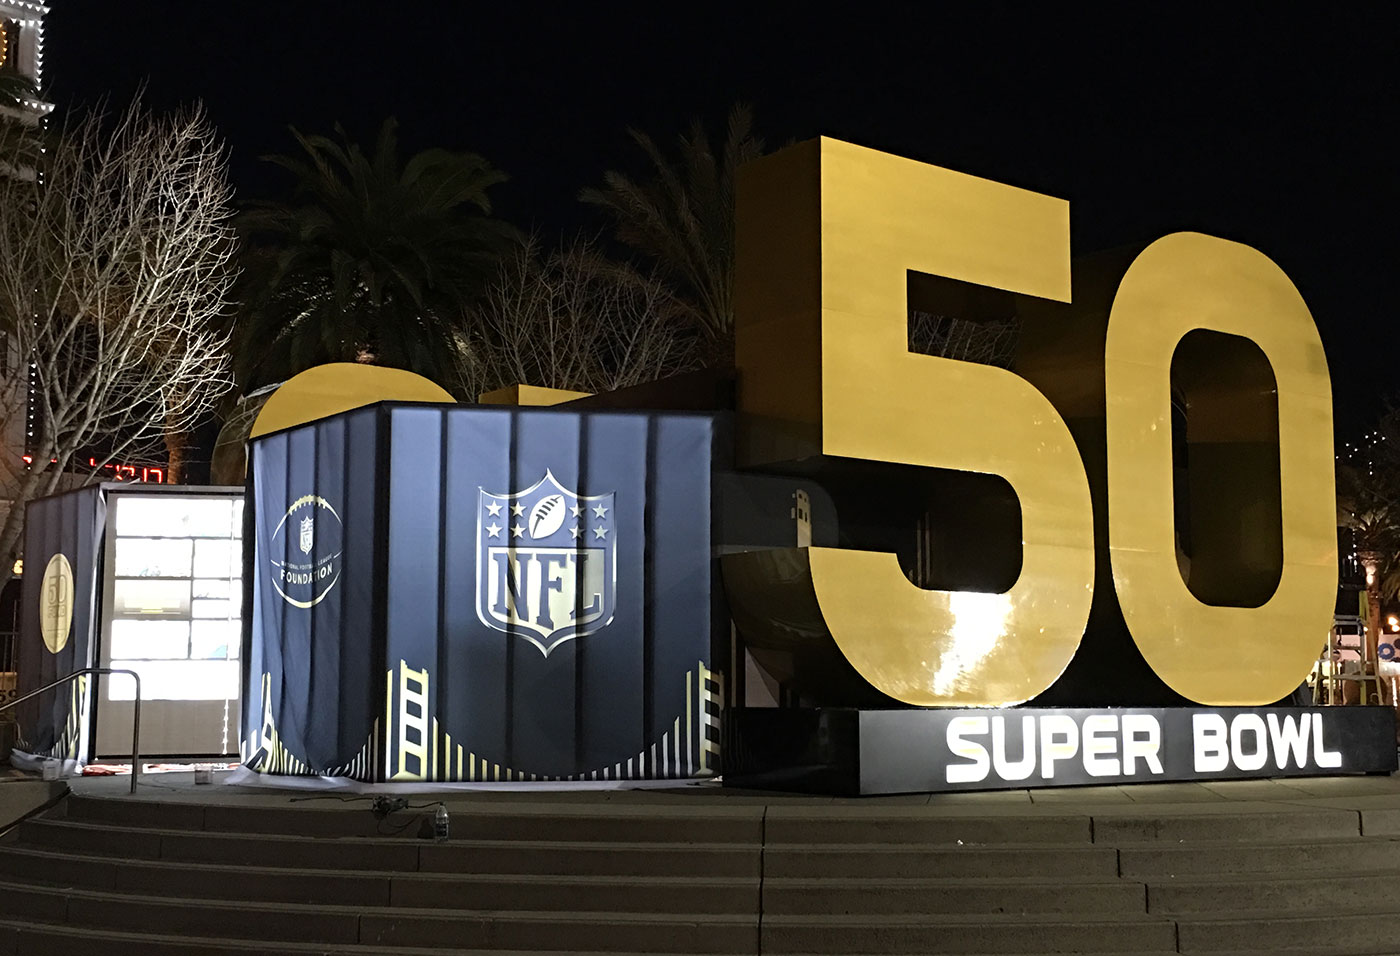 Super Bowl 50 in San Francisco